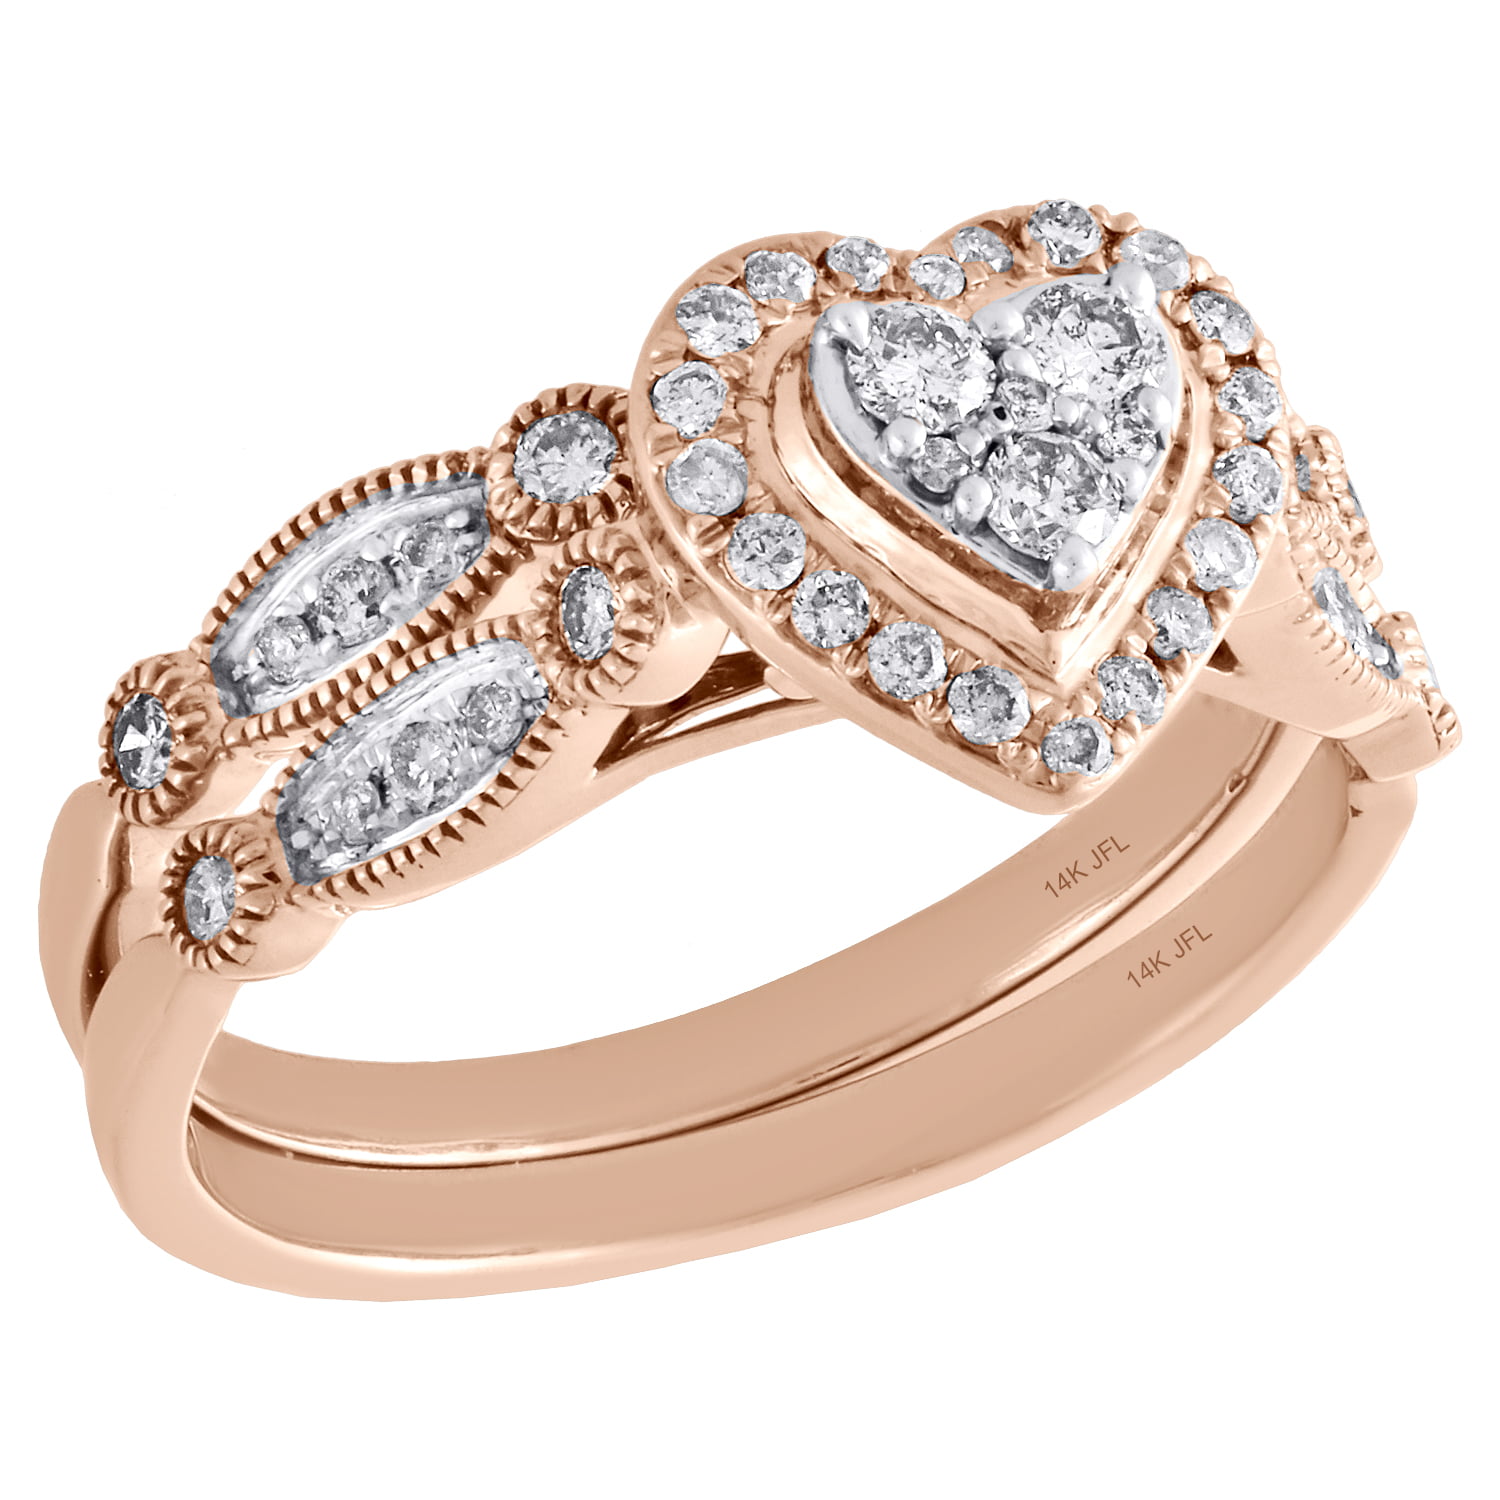 Gold engagement ring set